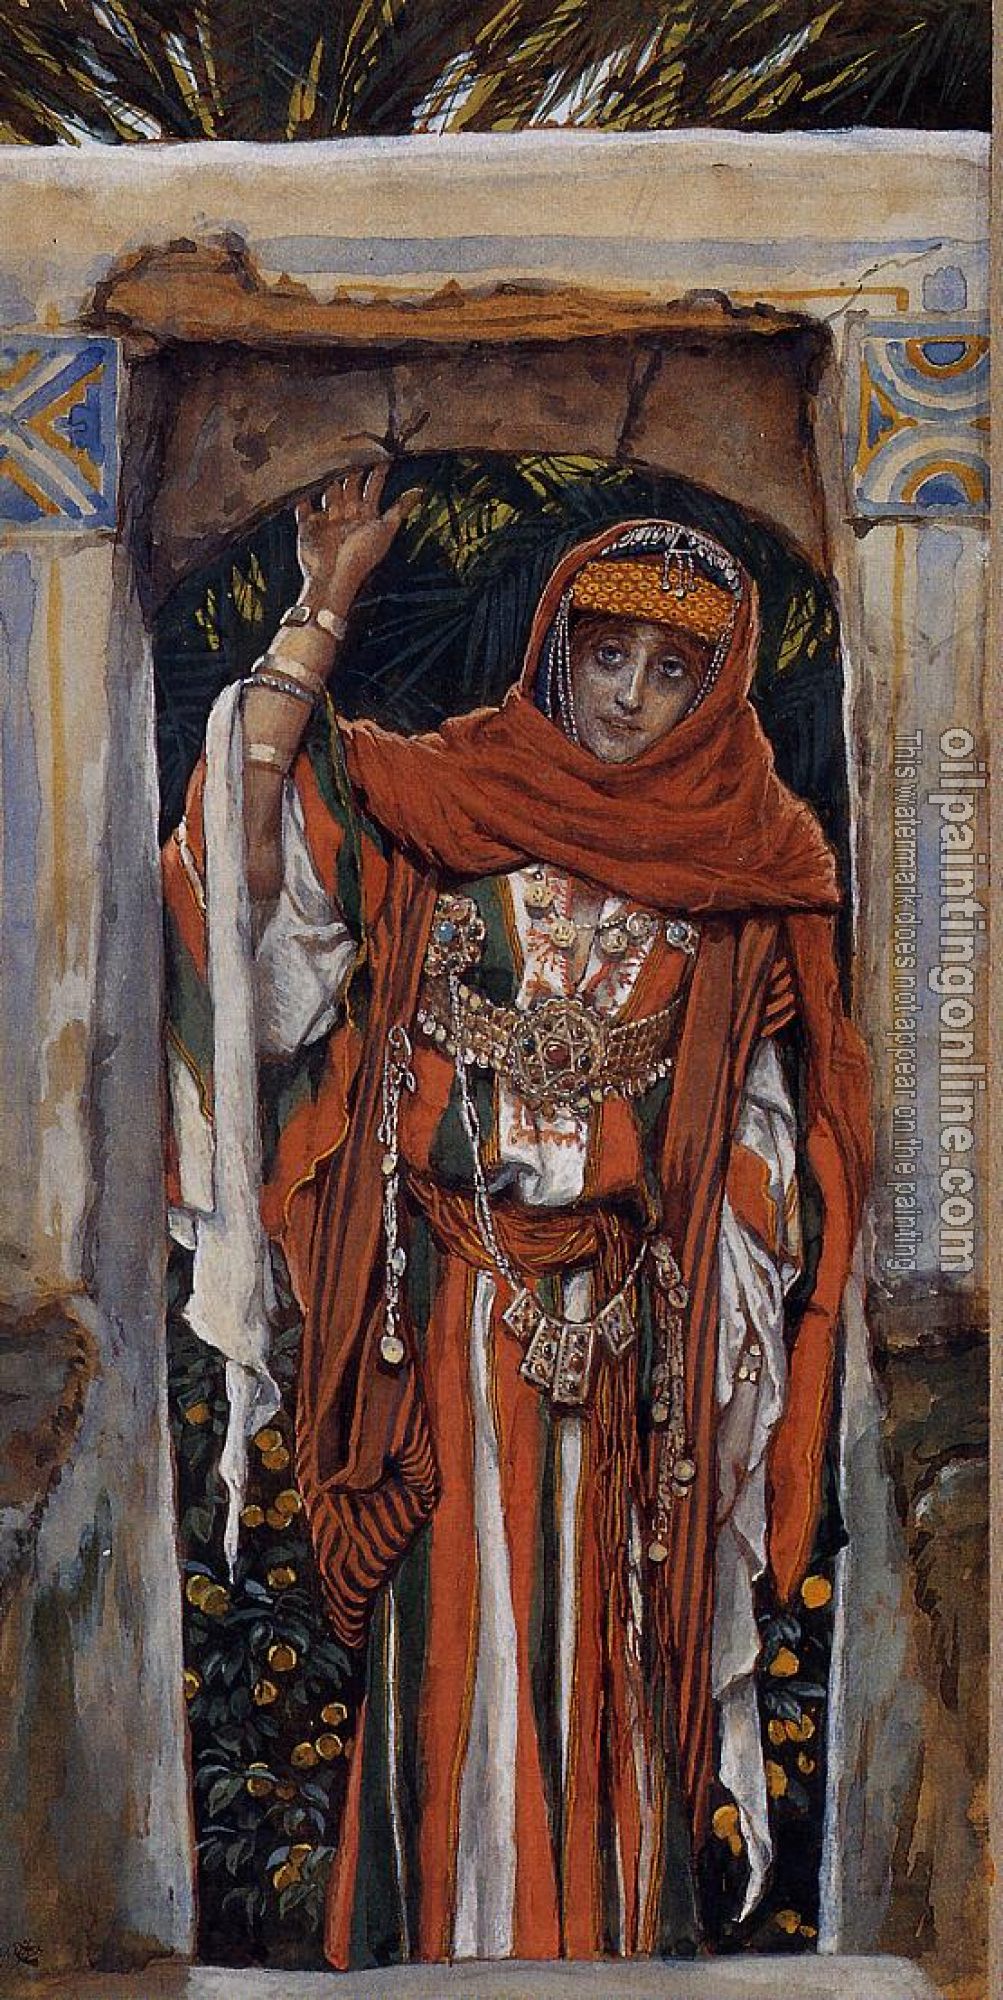 Tissot, James - Mary Magdelane before Her Conversion